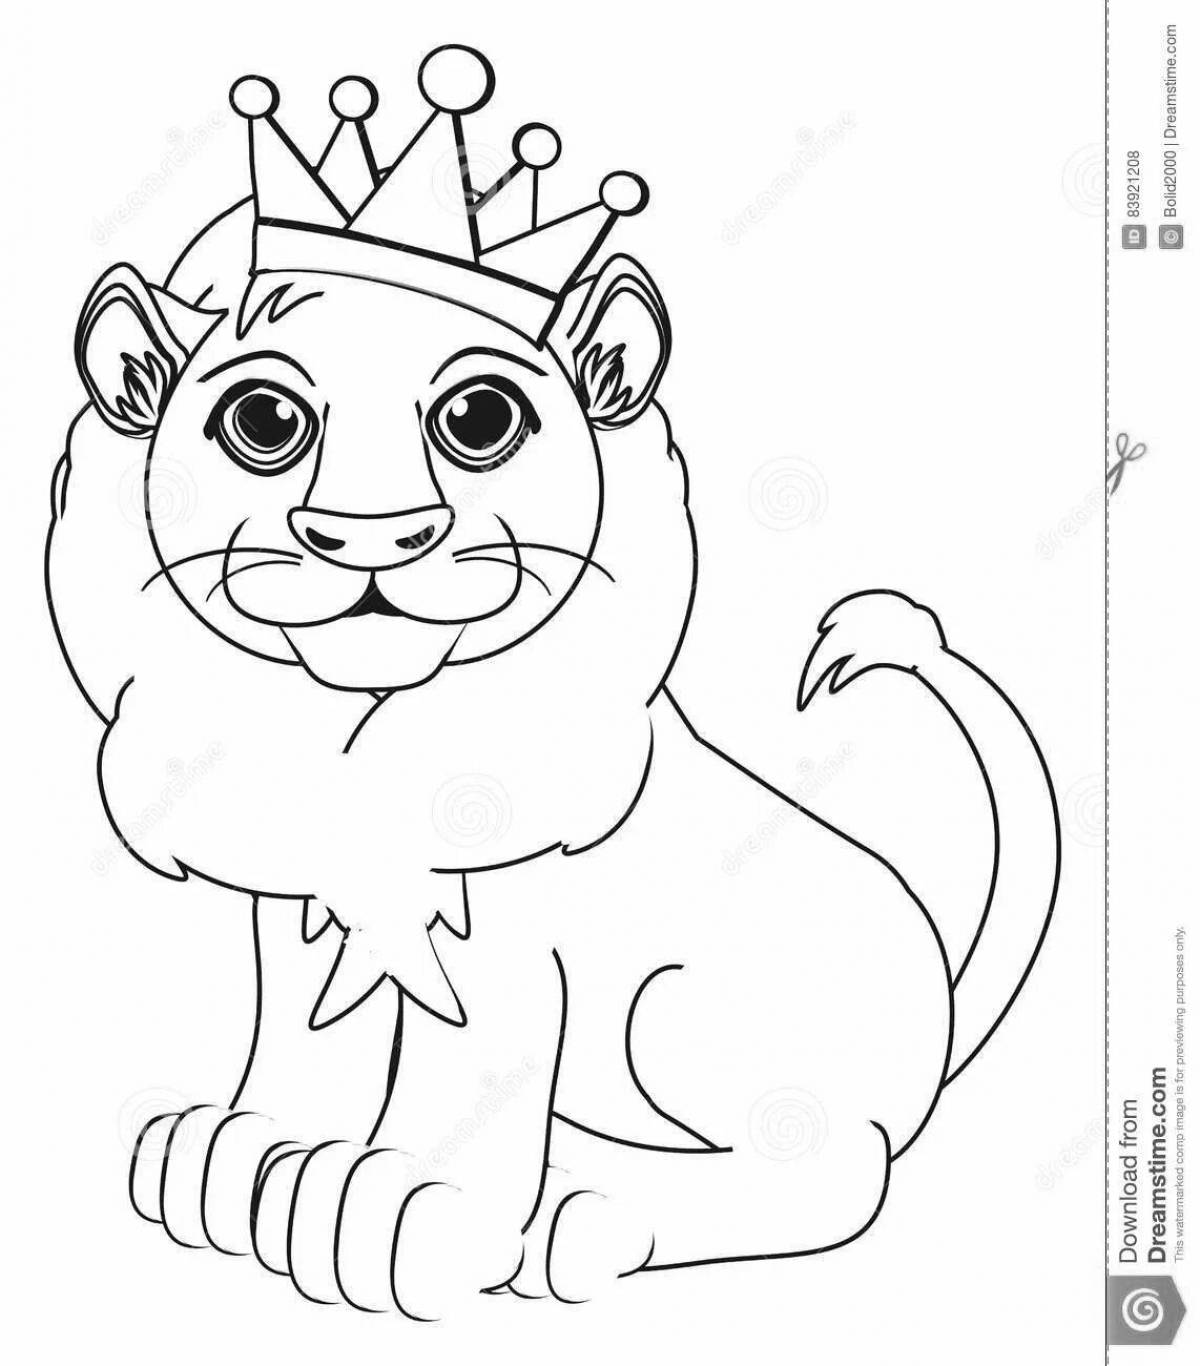 Crown cat #2